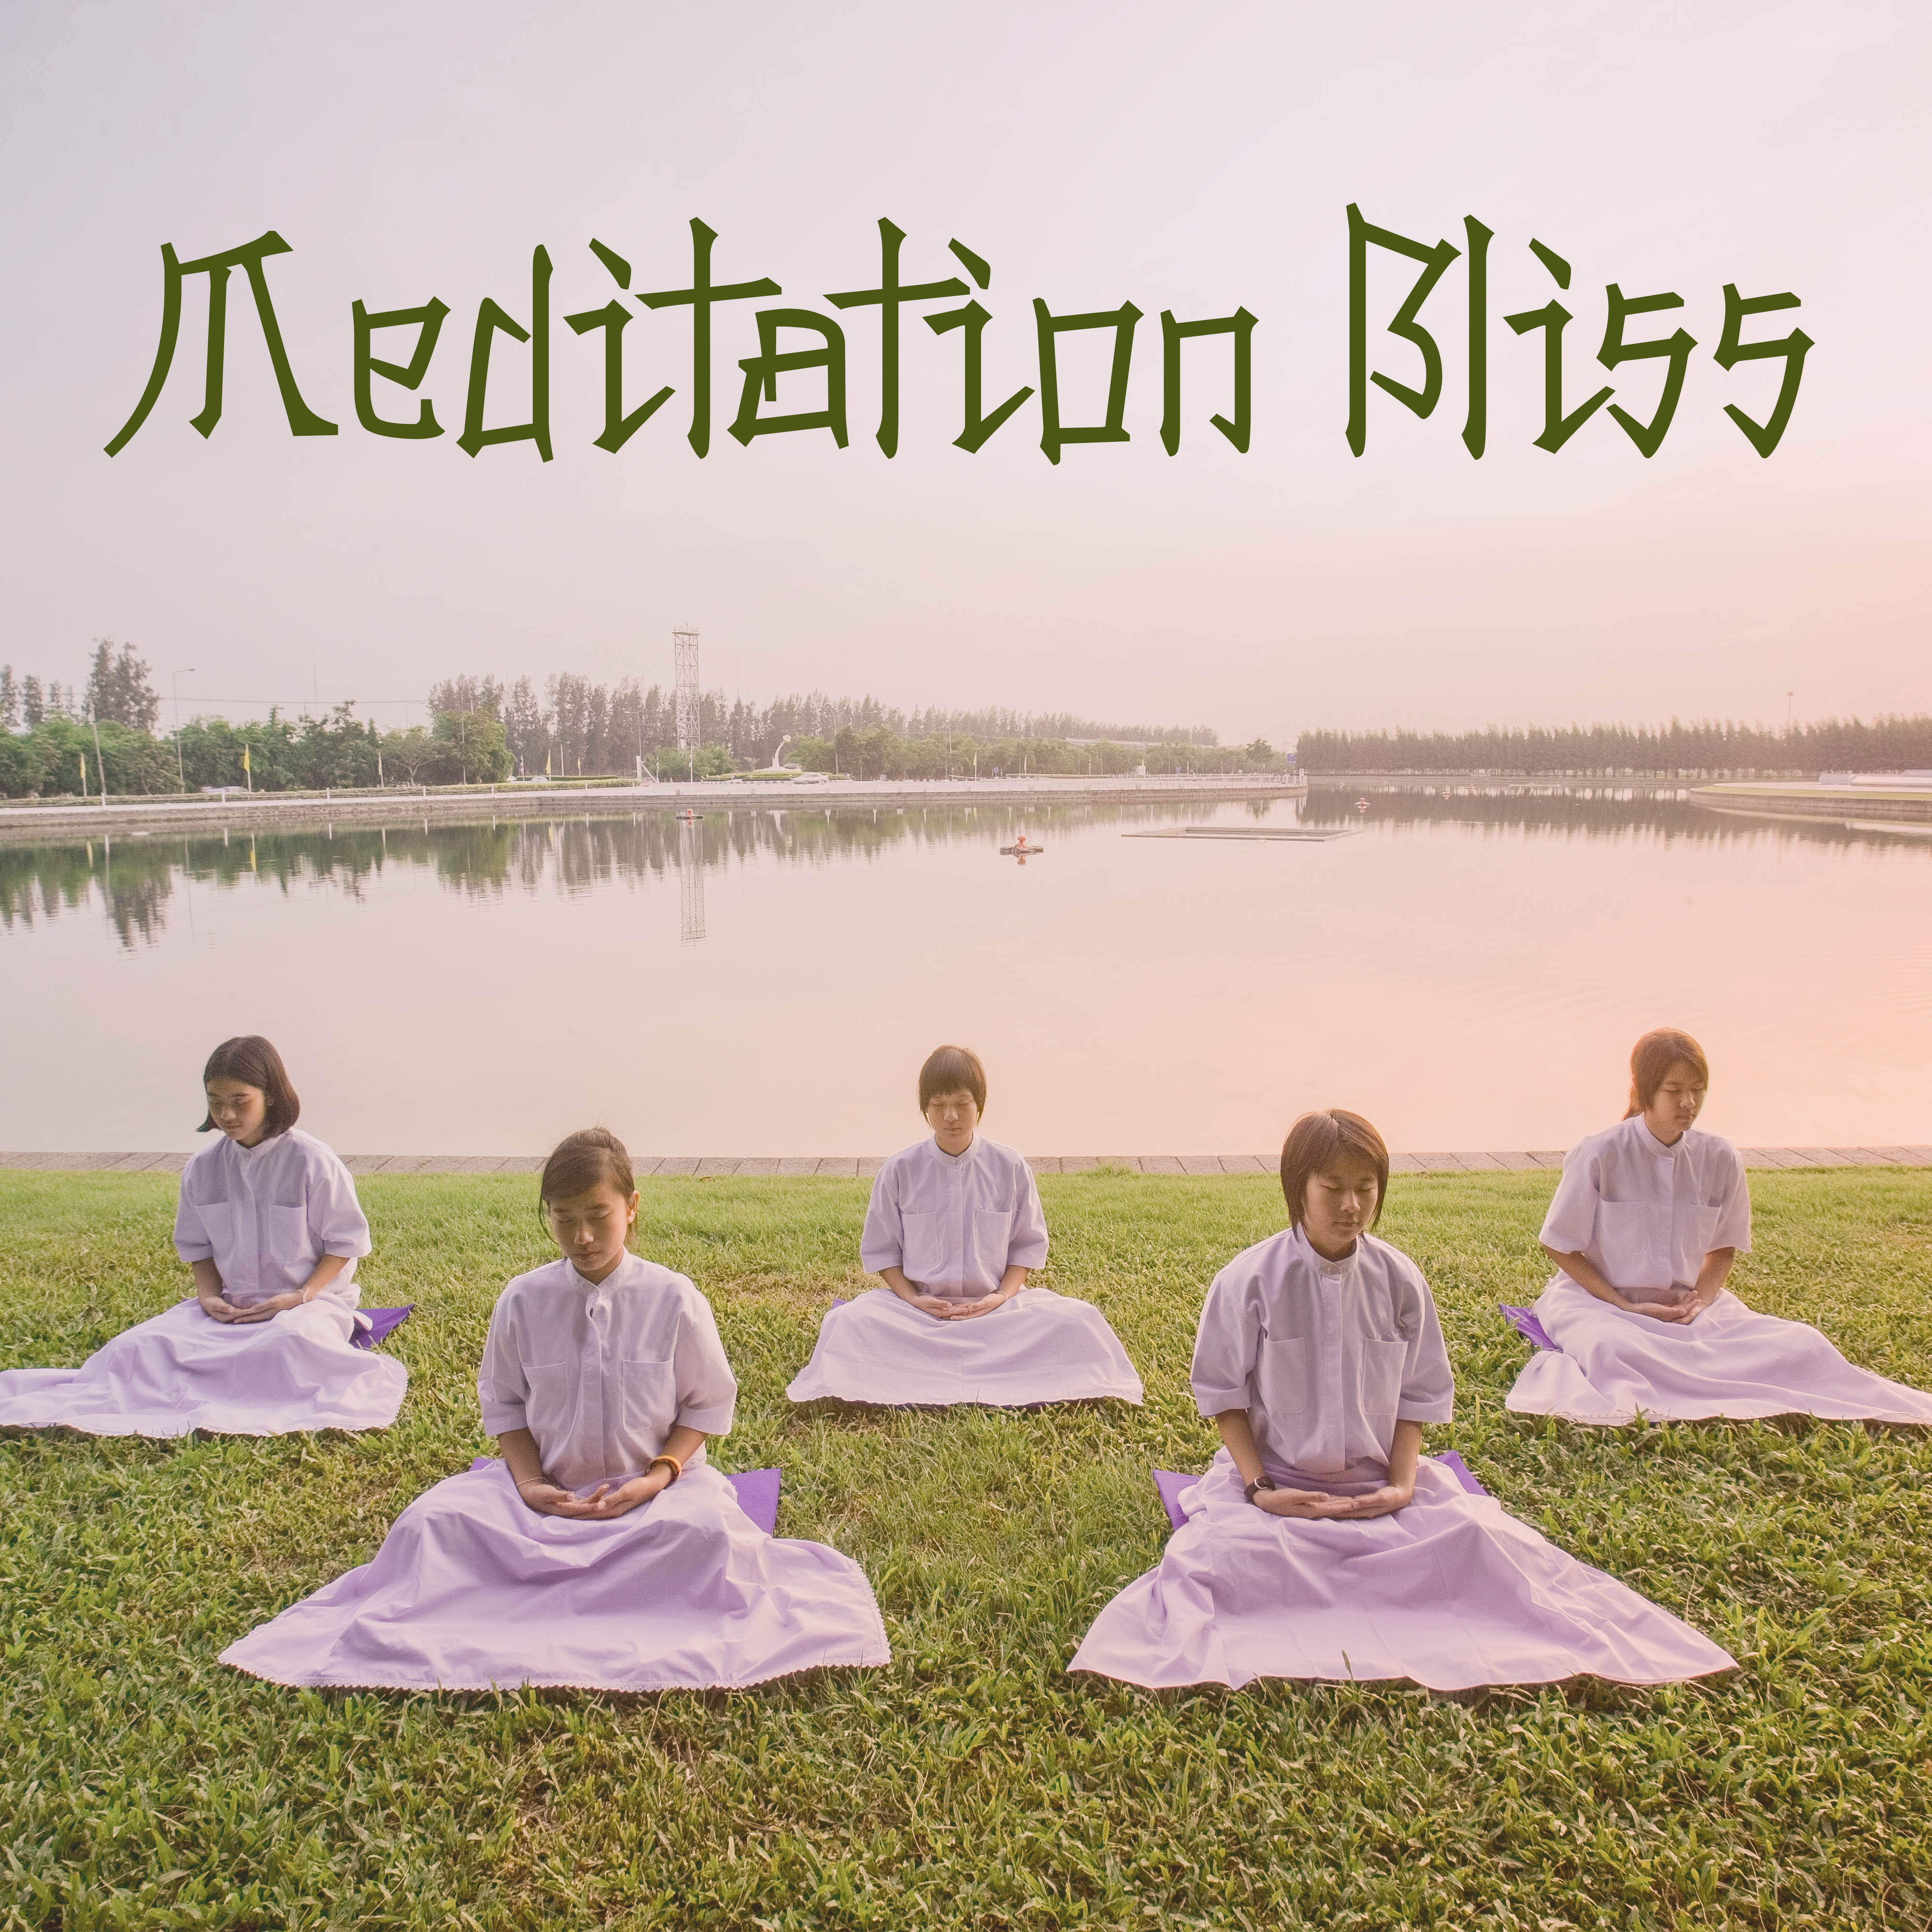 Meditation Bliss  Relaxing Music, Meditation Background Music, Helpful for Yoga Practice, Feel Zen Energy